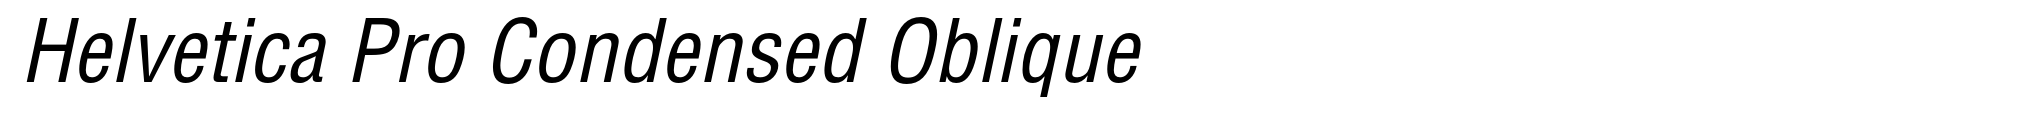 Helvetica Pro Condensed Oblique image